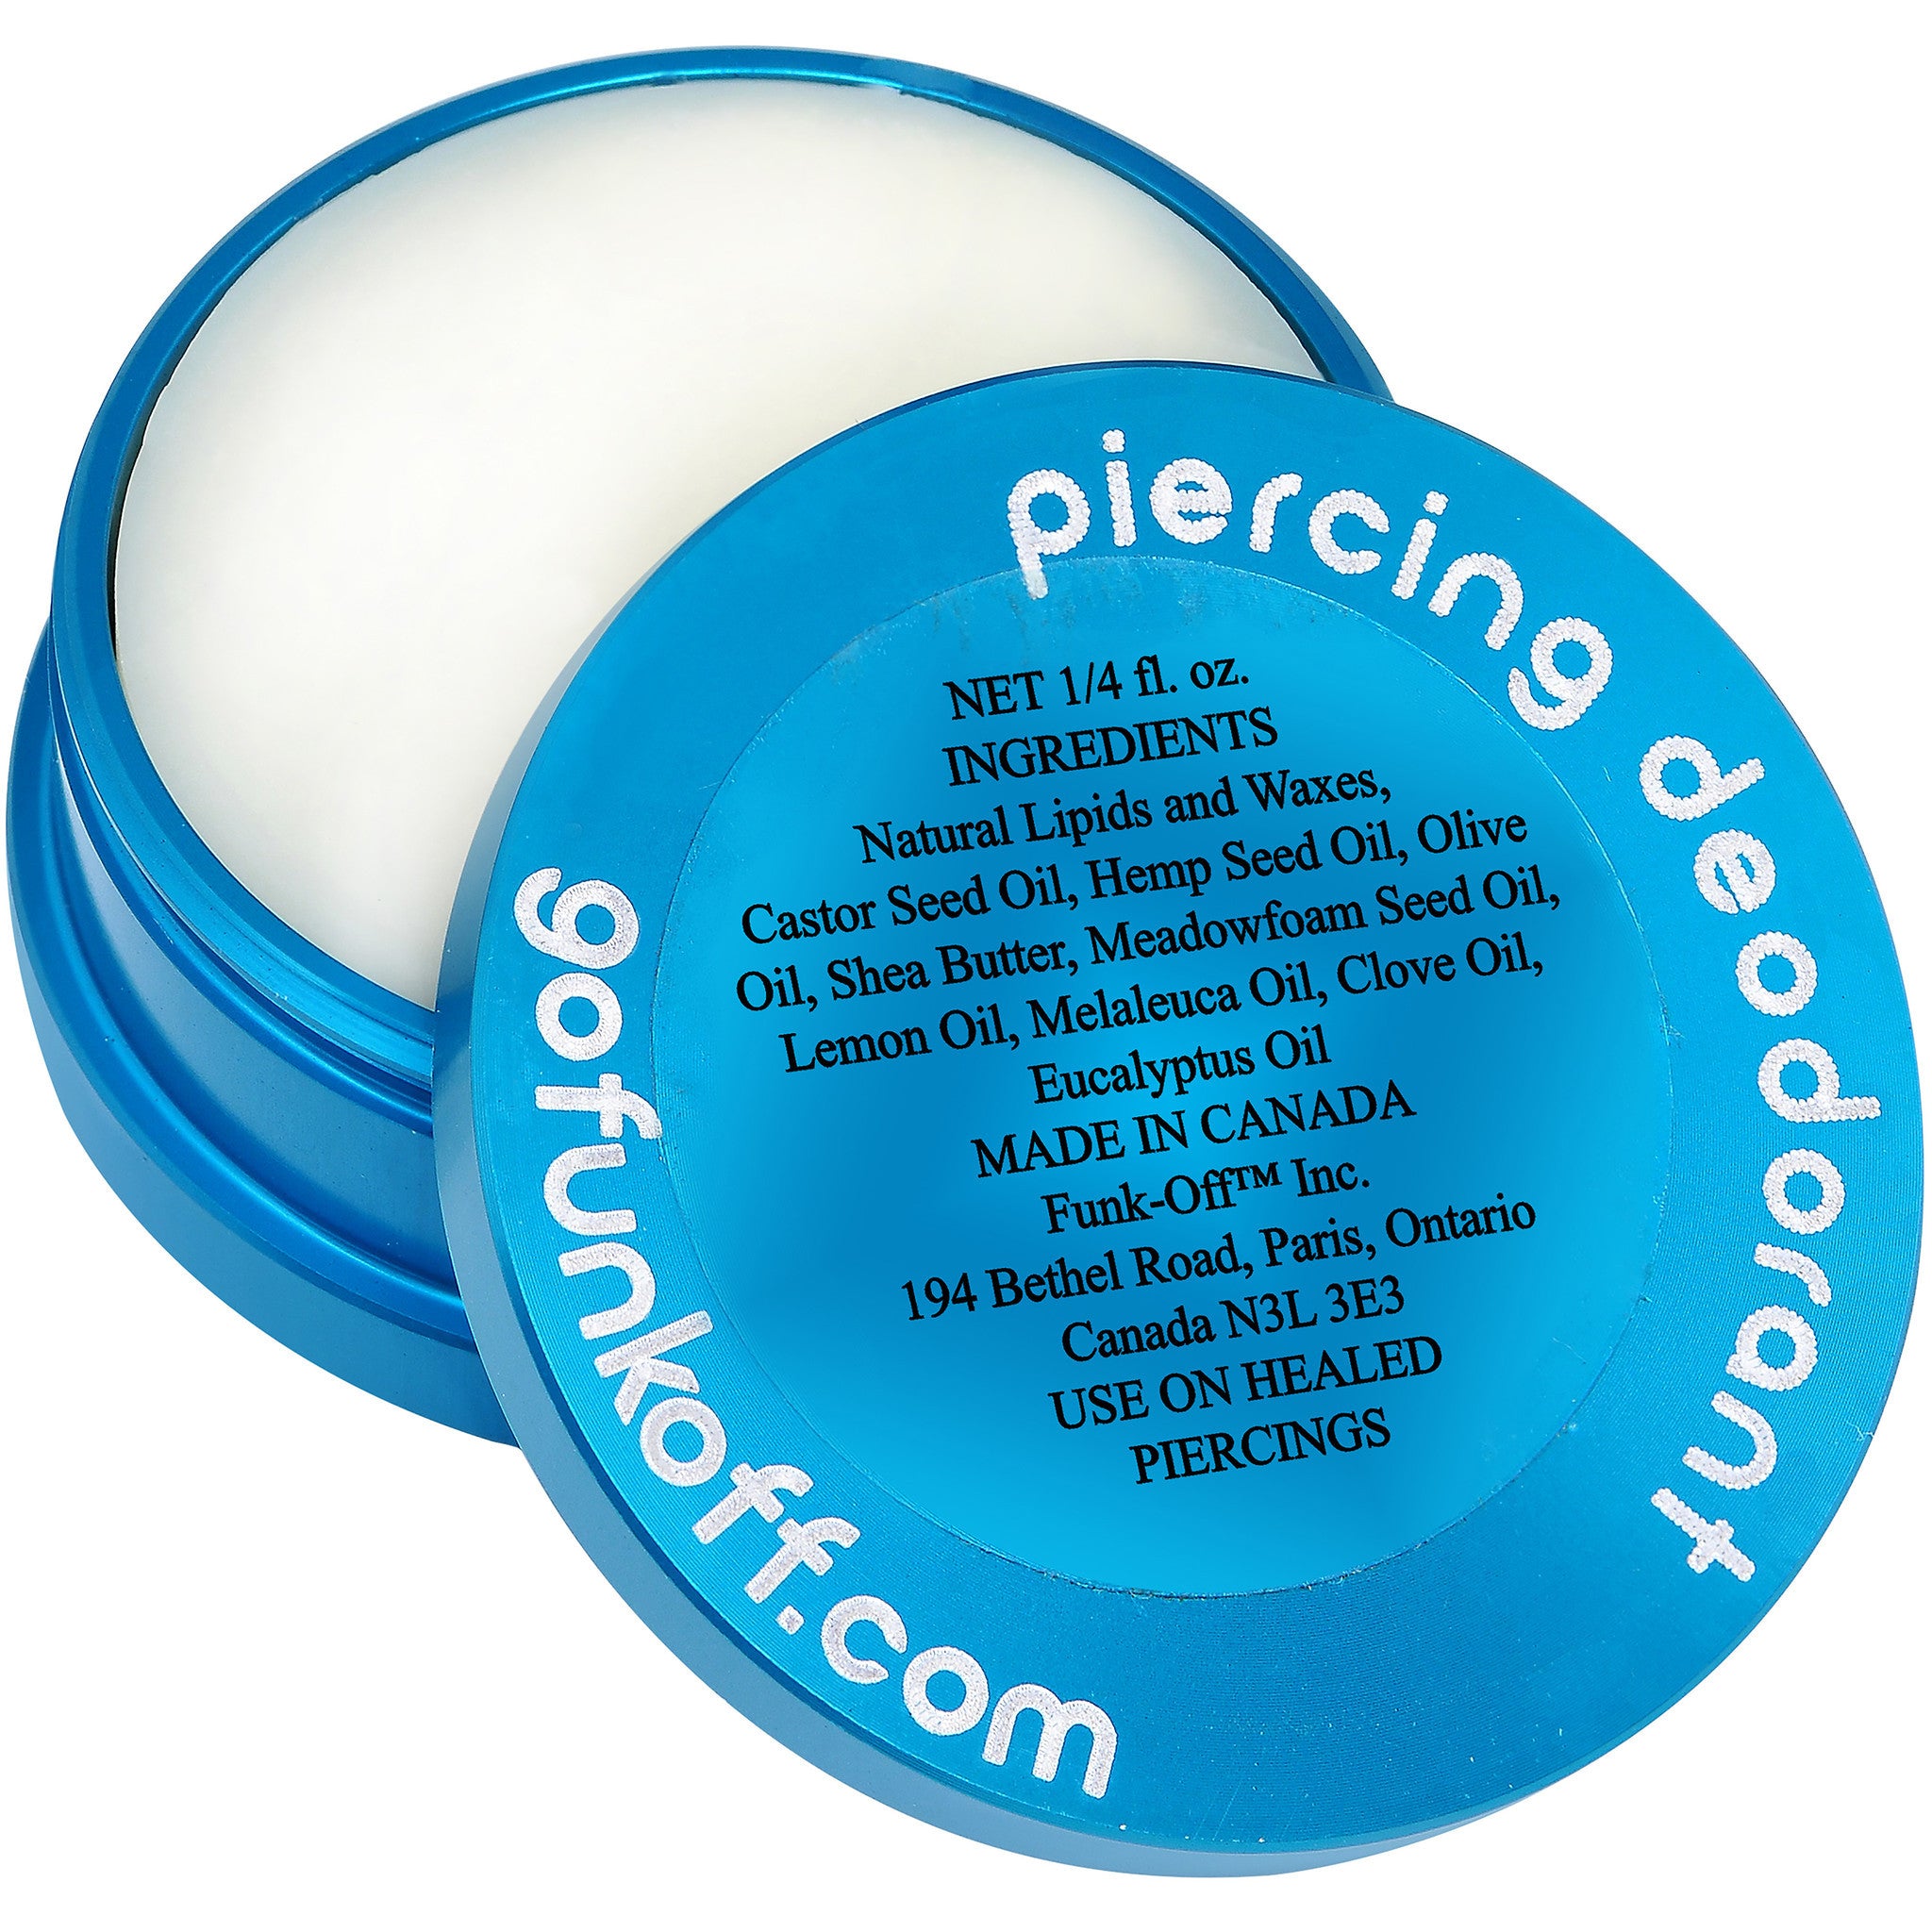 Clear Gem Aqua Funk-Off Piercing Deodorant